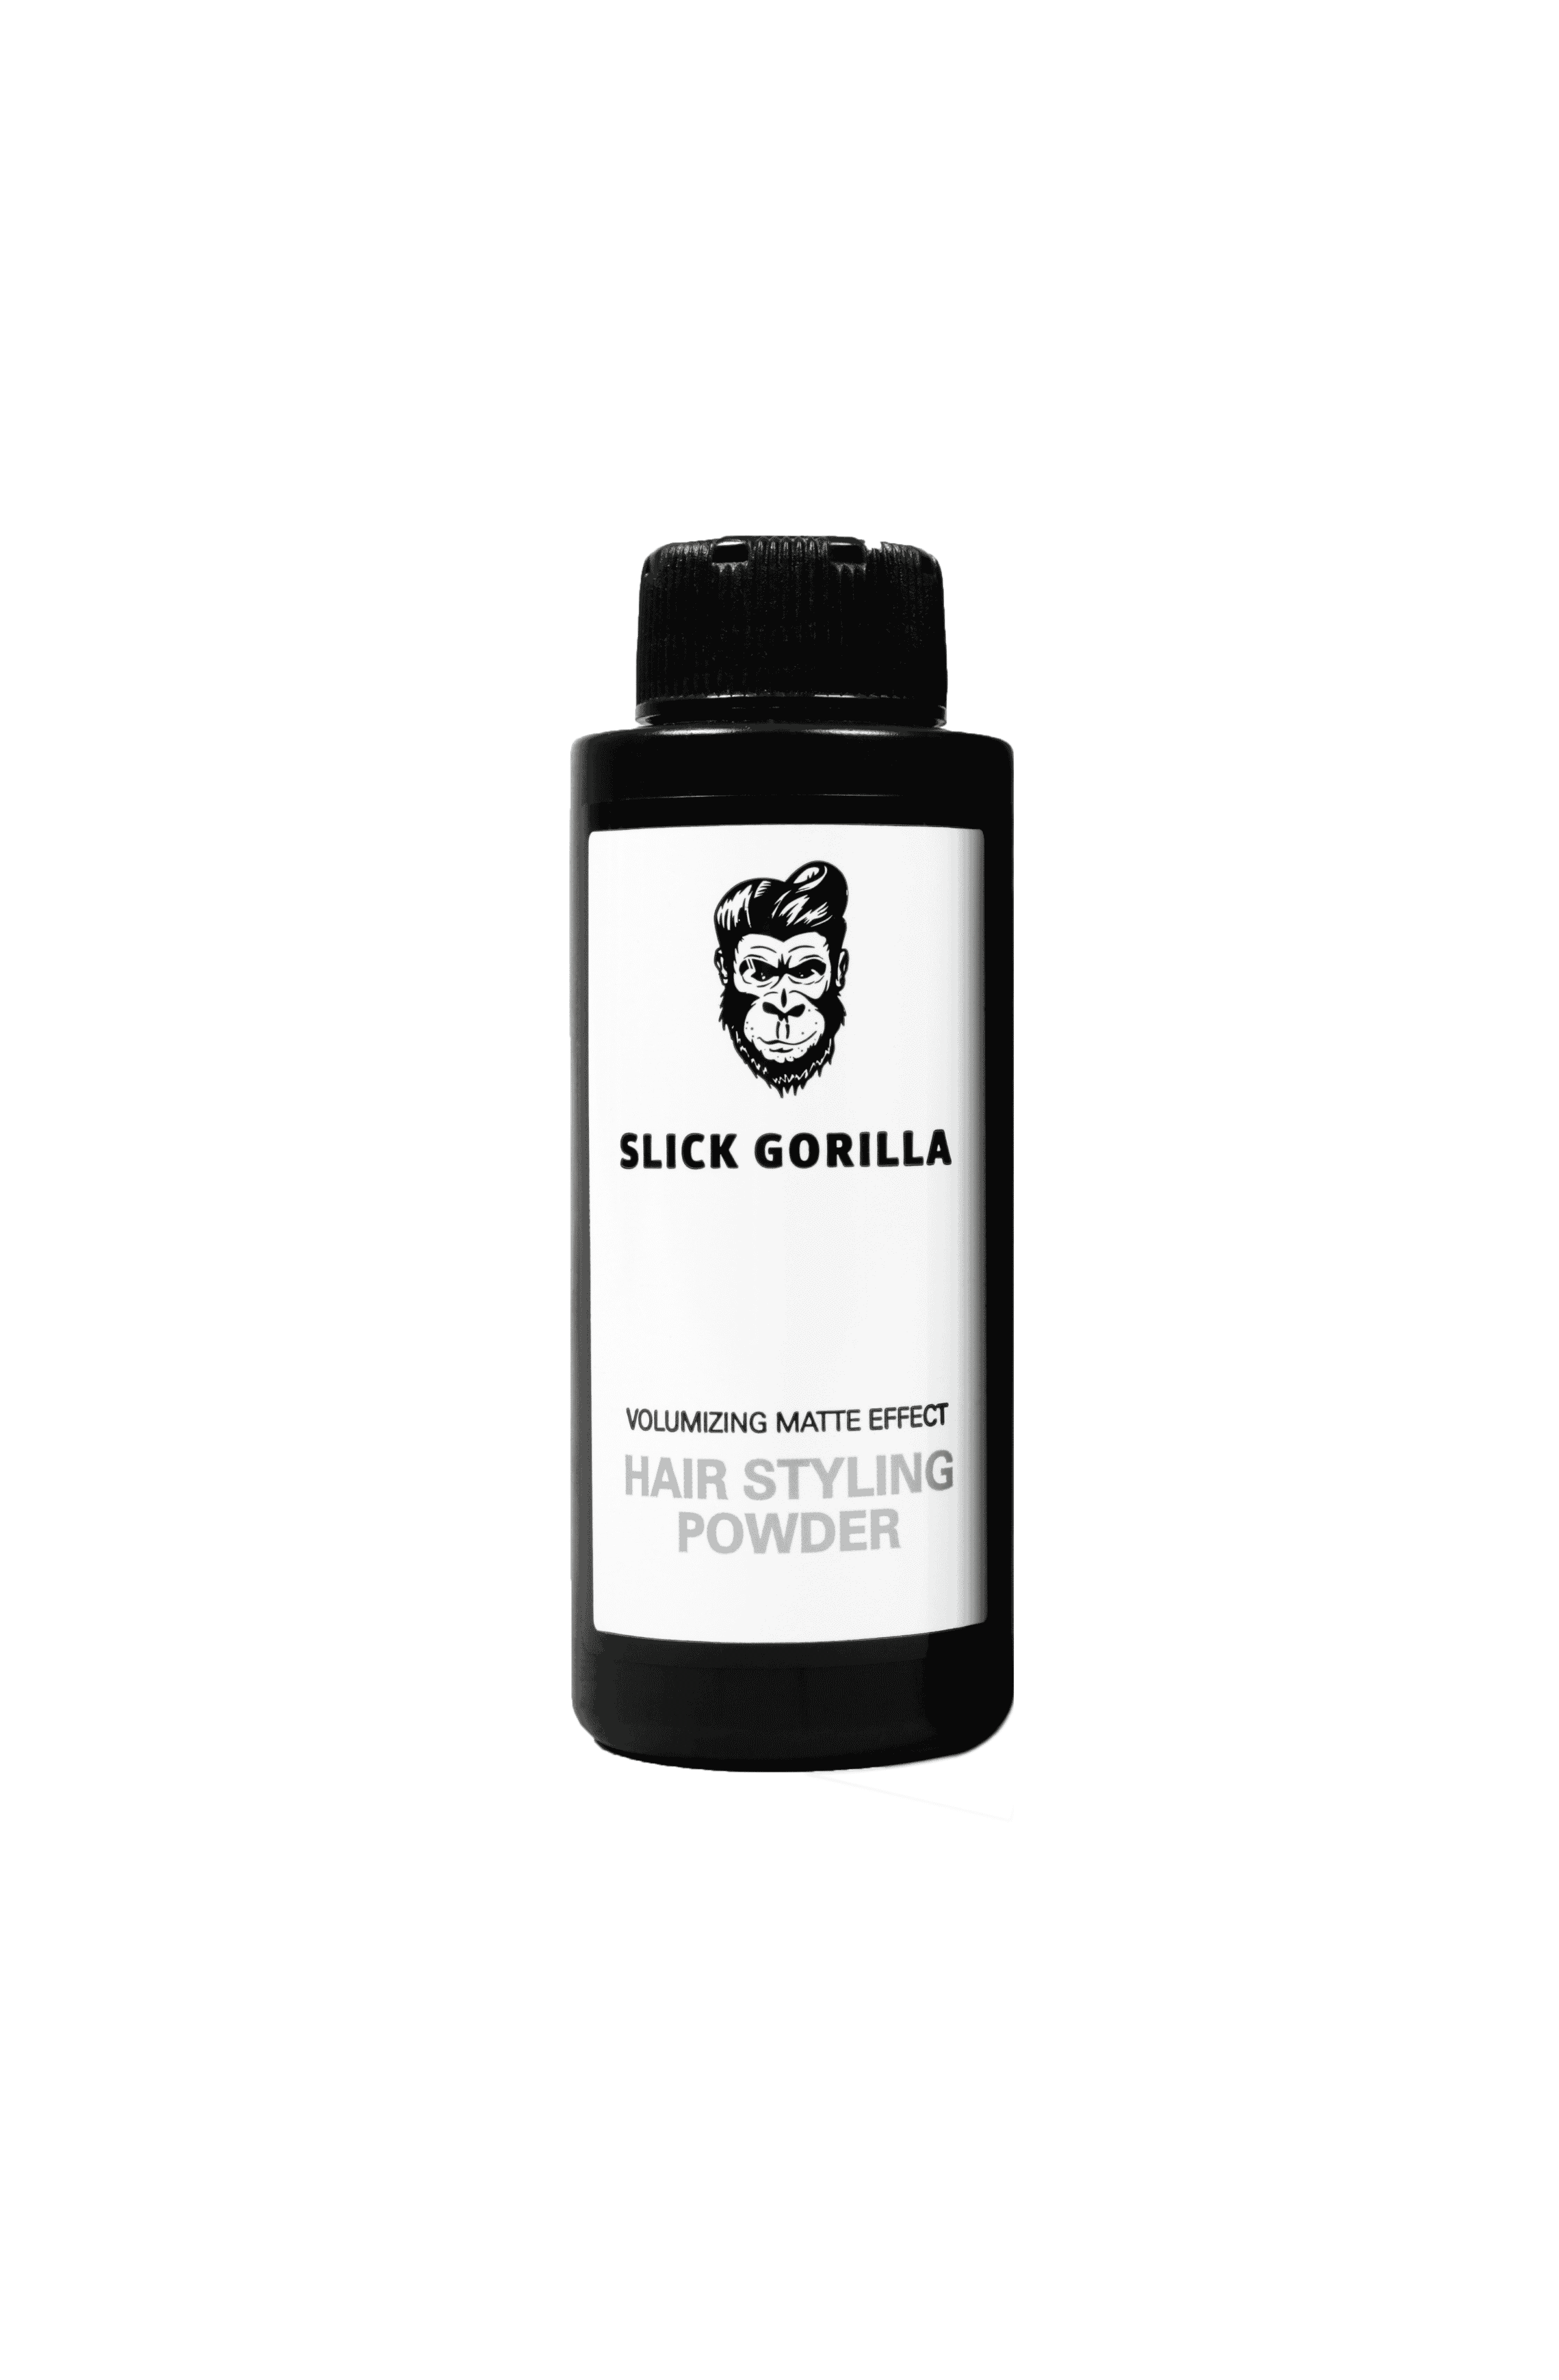 Slick Gorilla Hair Styling Texturising Powder Review